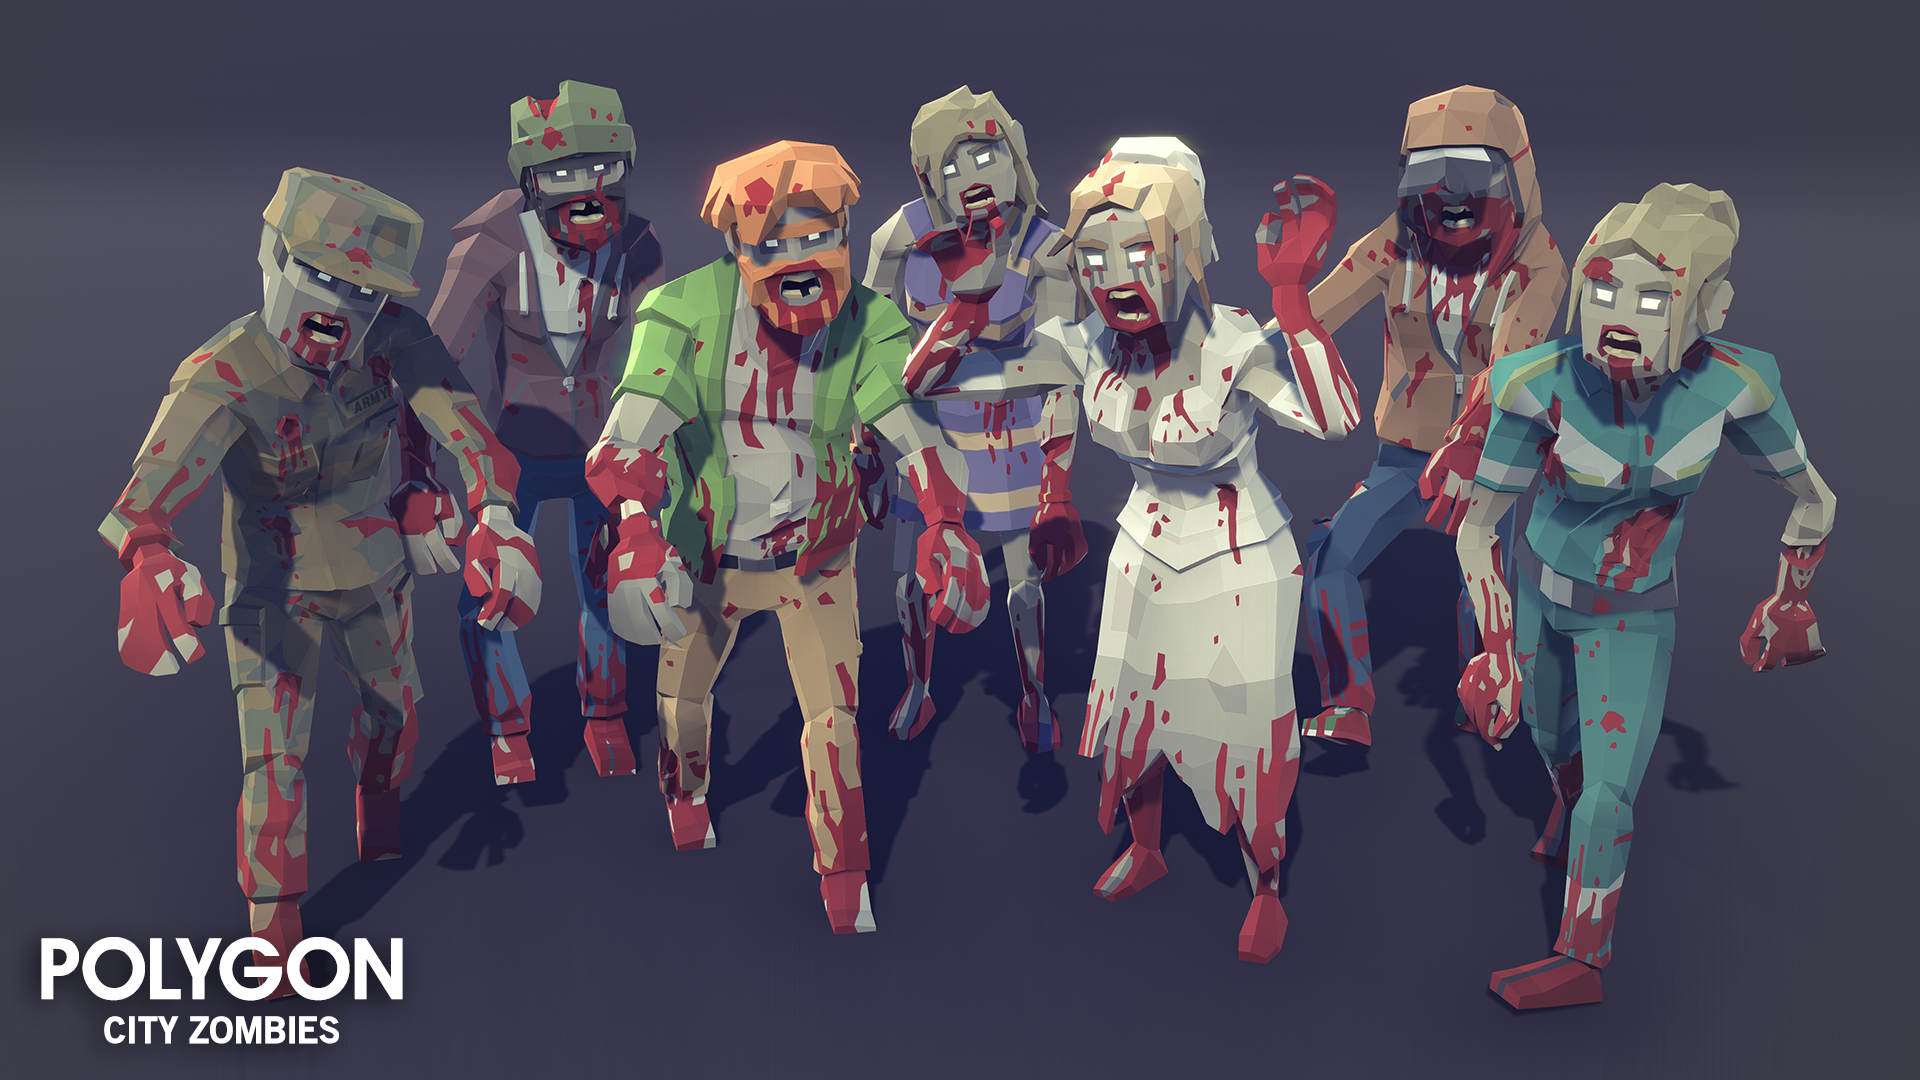 Civilian zombie assets for game development